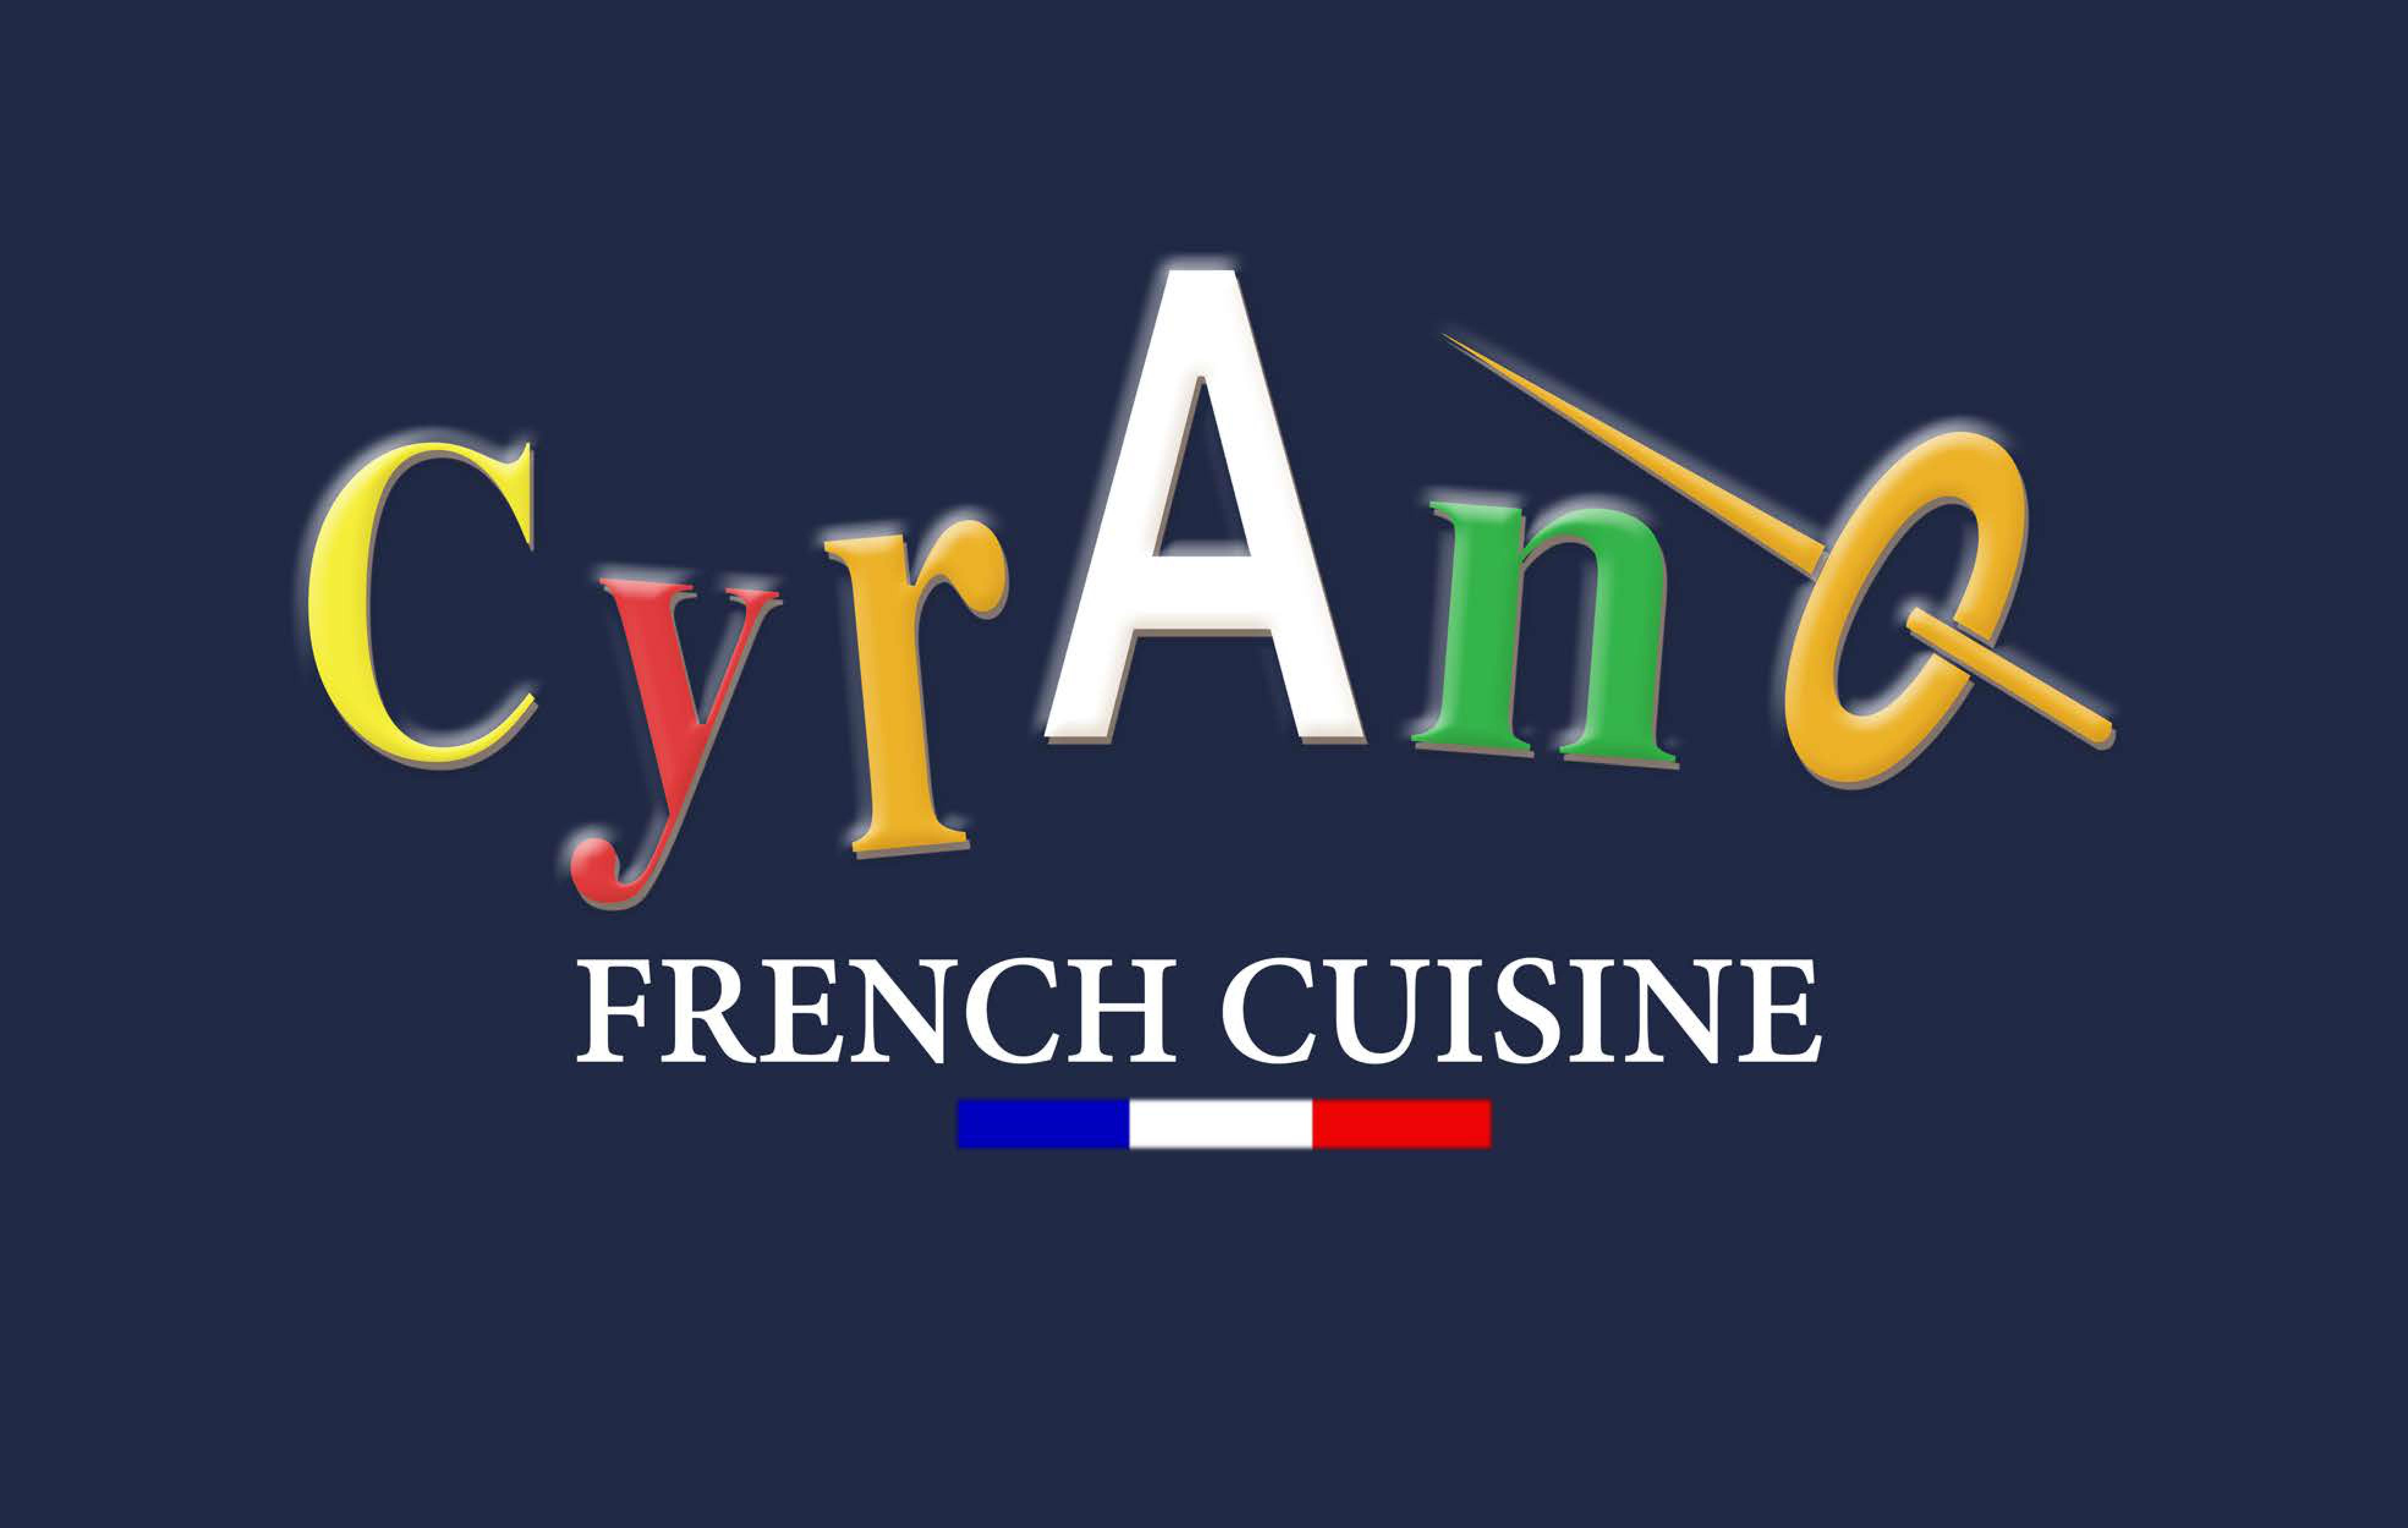 Cyrano Varberg logo